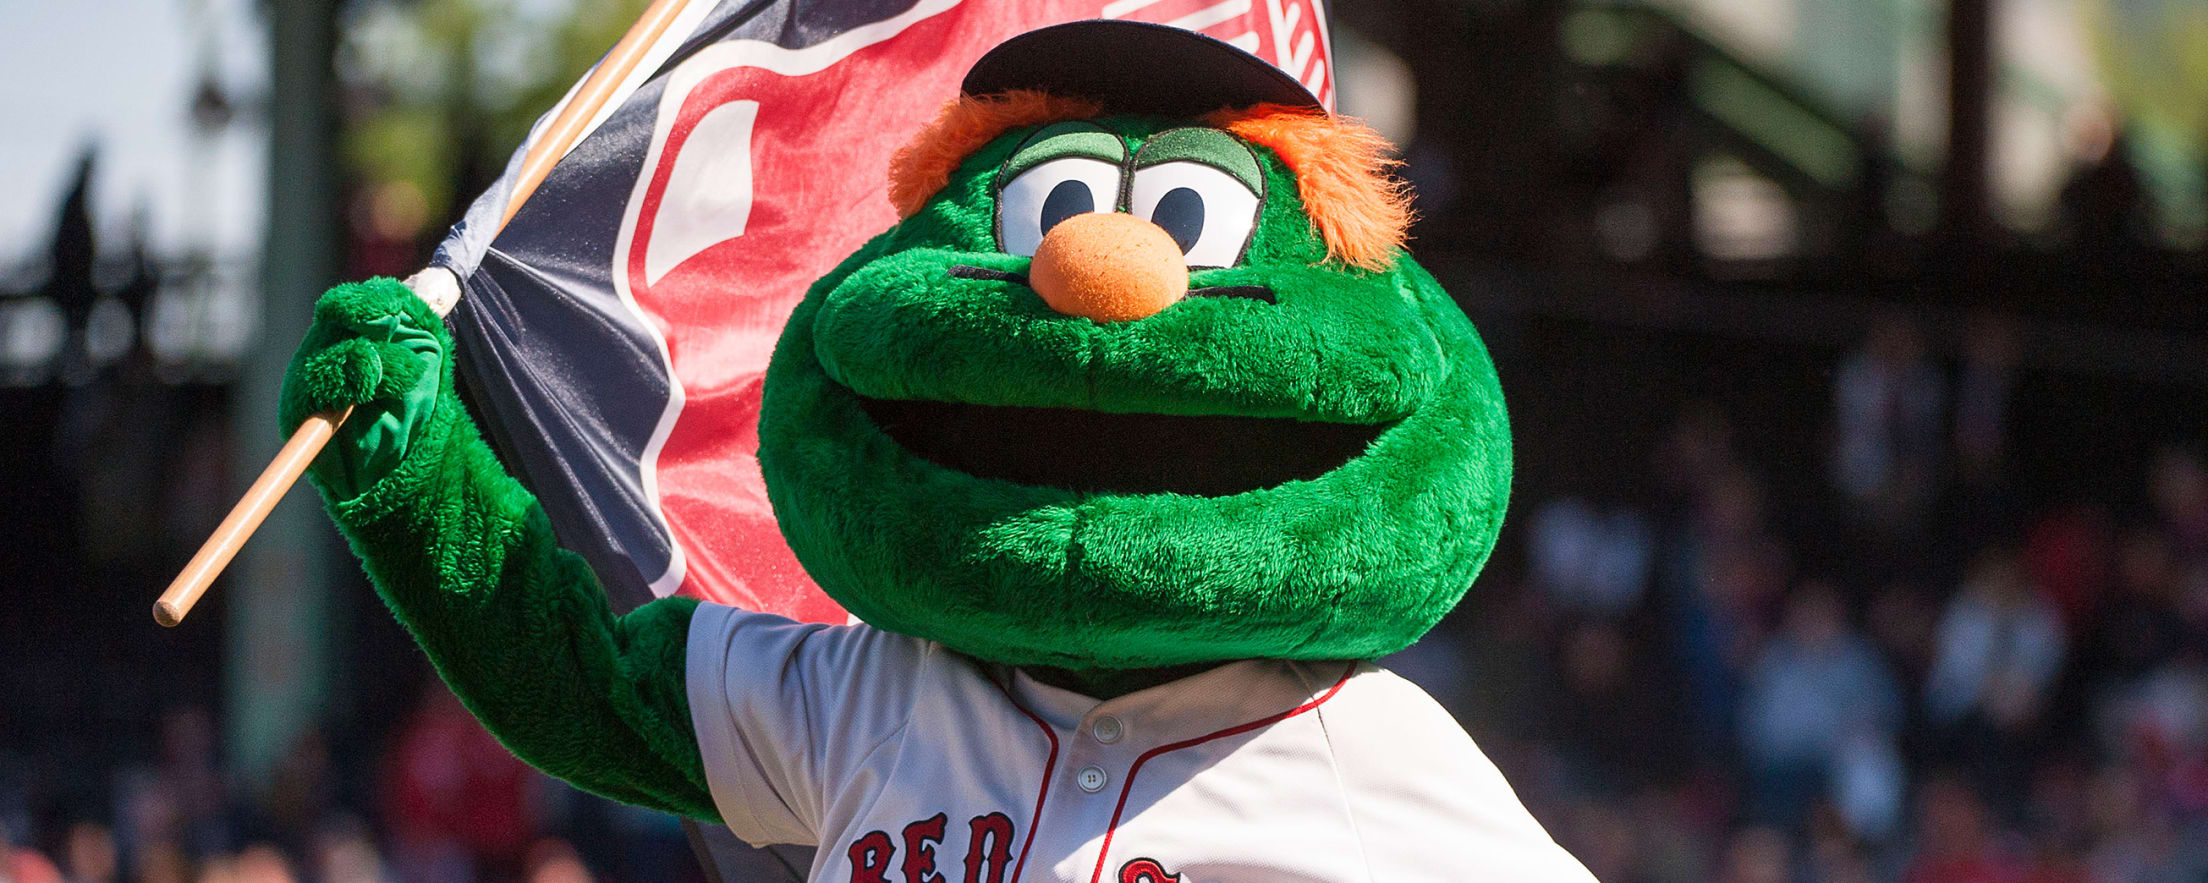 BOSTON, MA - FEBRUARY 03: Boston Red Sox mascots, Tessie the Green